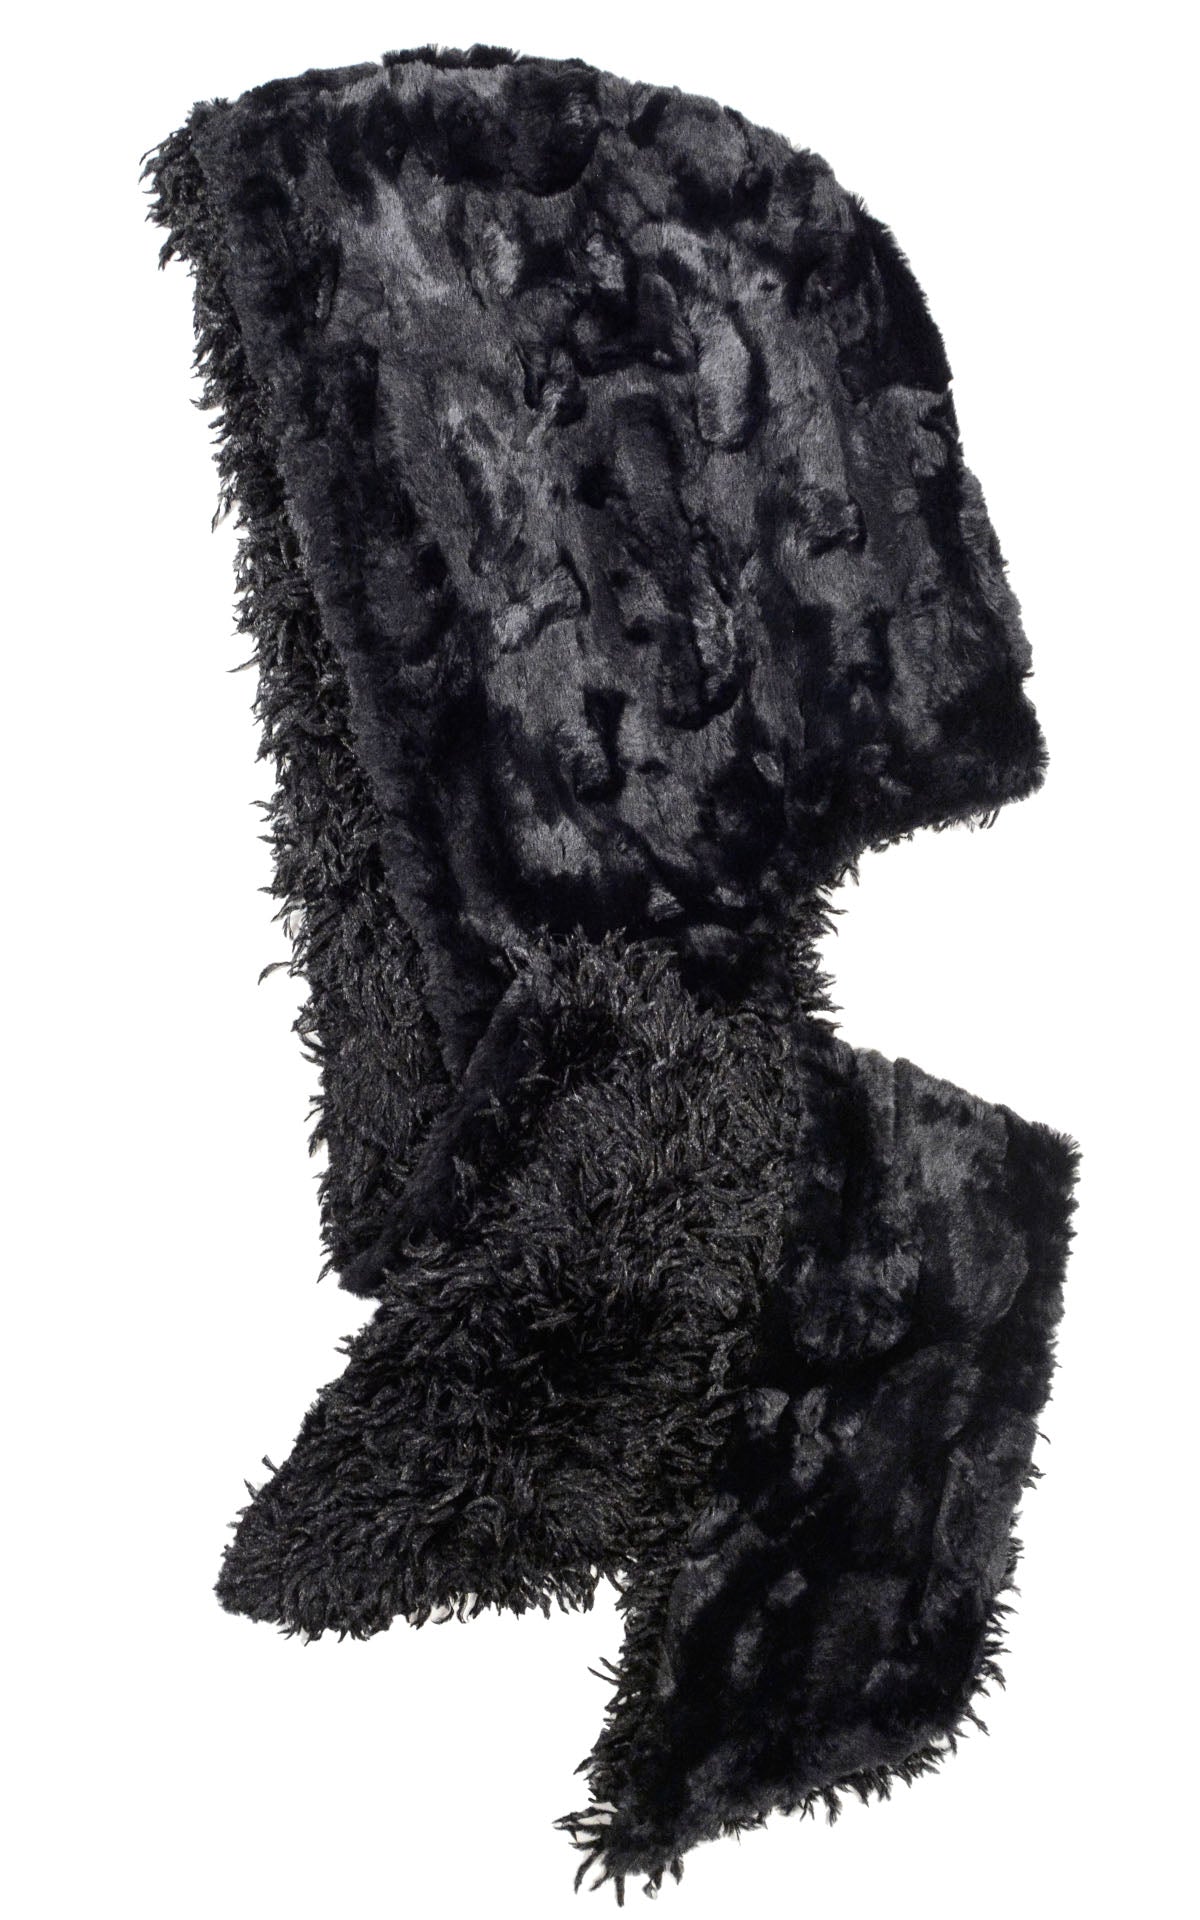 Unisex Two-Tone Hooded Scarf | Black Swan, Faux Feather reversing to Cuddly Fur in Black Faux Fur, shown in reverse| Handmade in Seattle WA | Pandemonium Millinery